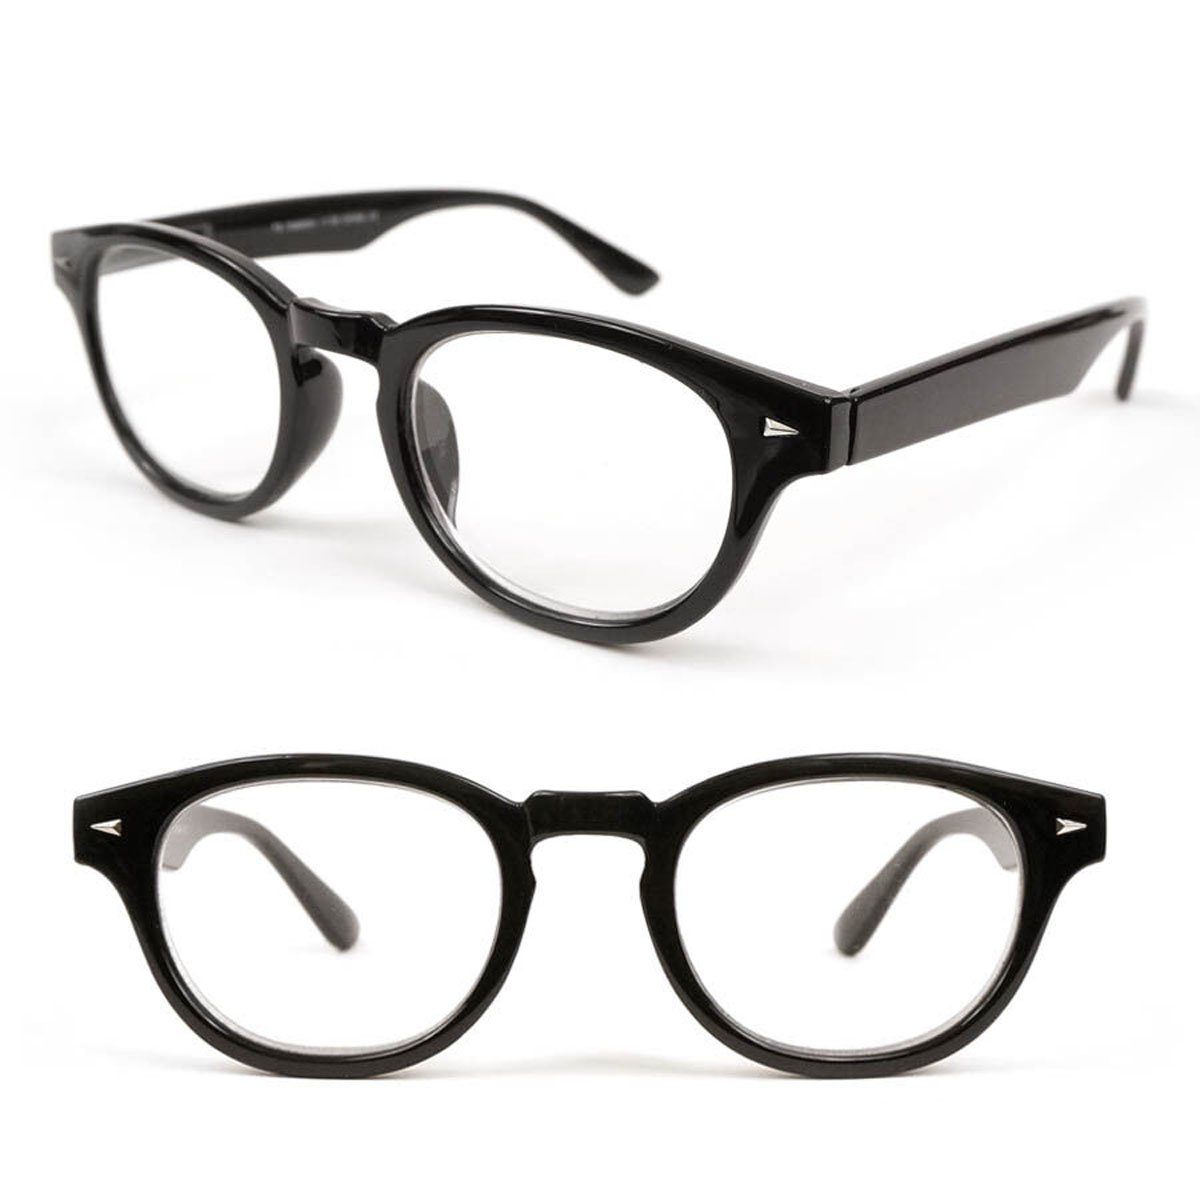 Medium Round Classic Frame Reading Glasses Geek Retro Vintage Style 100-375 - Black, +2.75